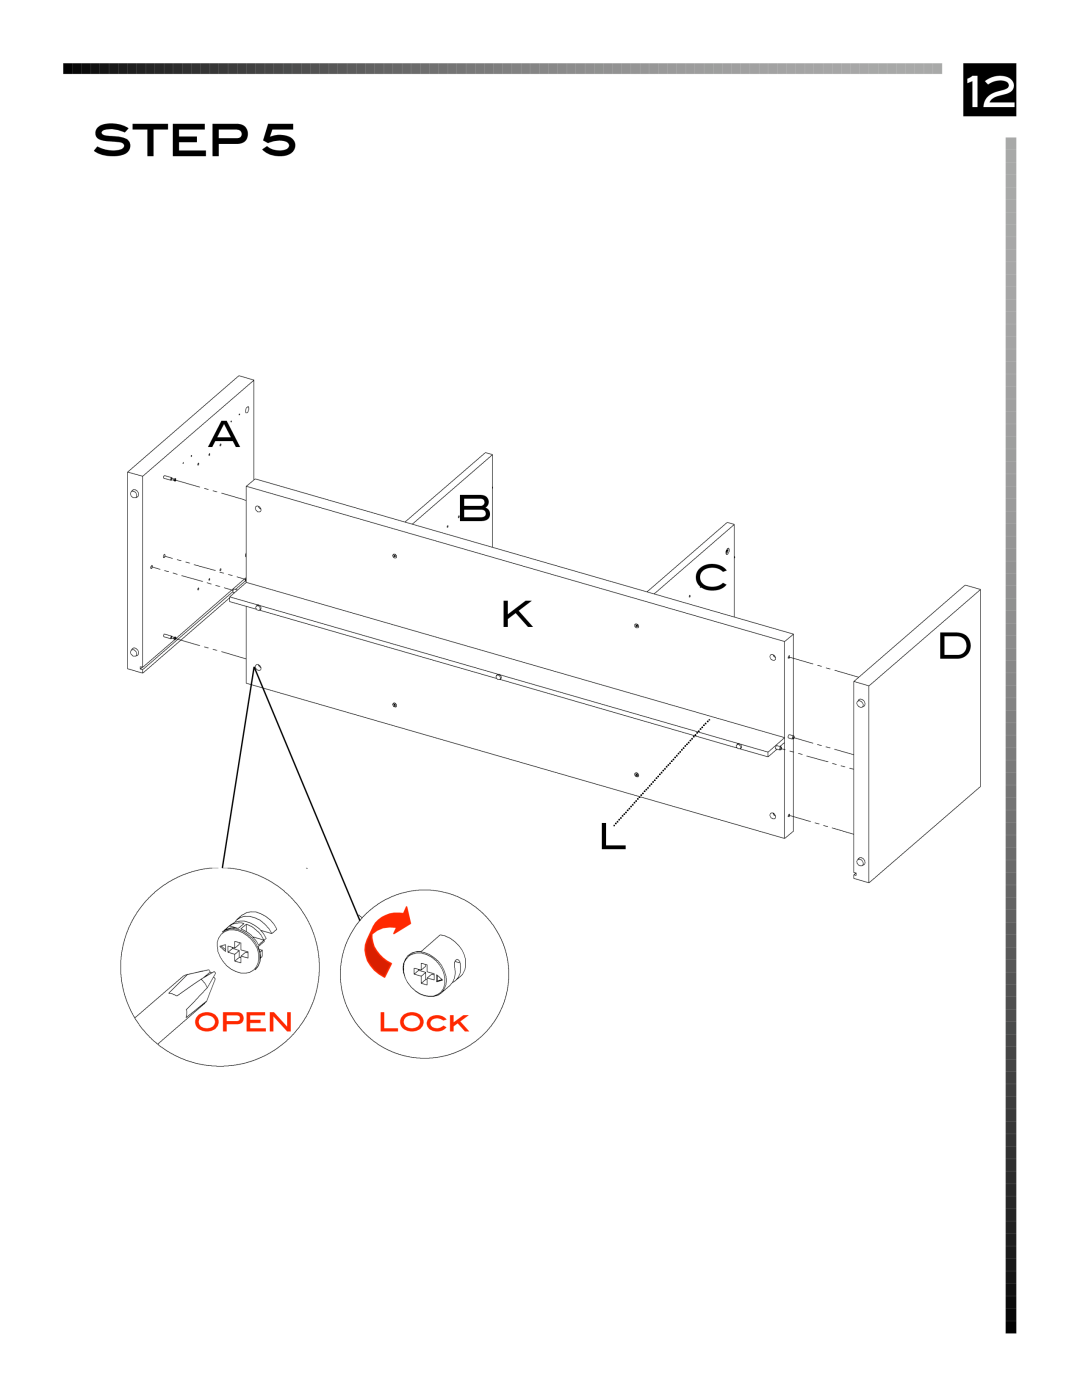 Pinnacle Design TV66607 manual A B C K D L, Step, OPEN LOck 